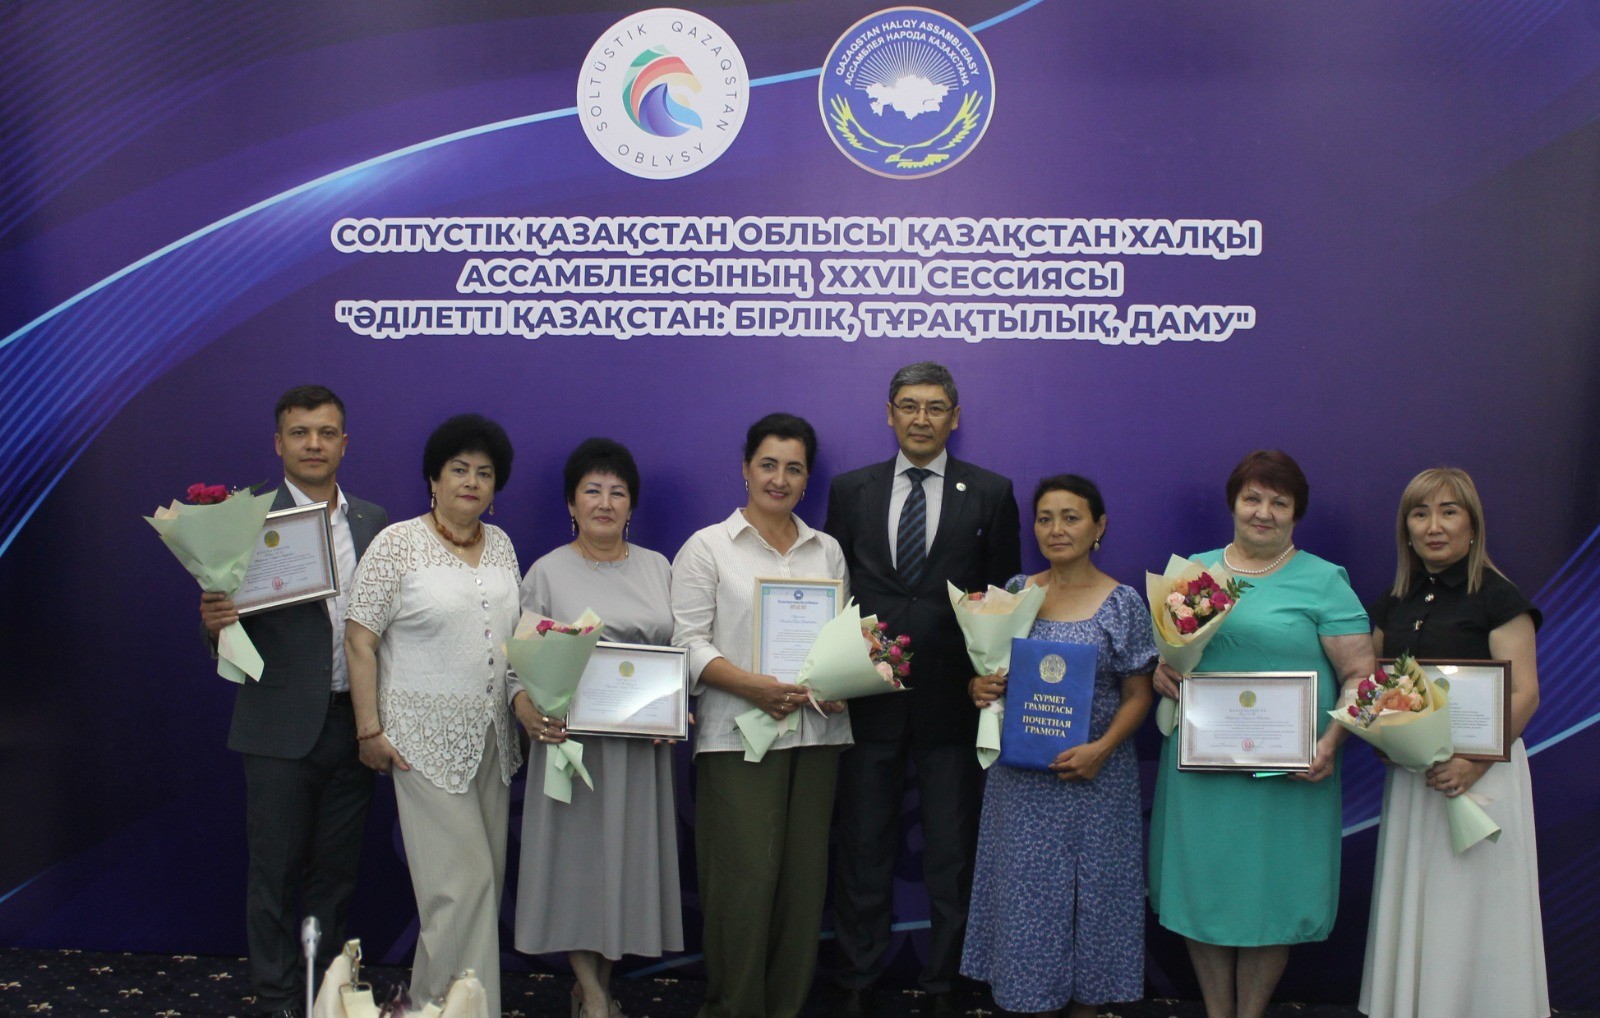 ХХХІІ сессия Ассамблеи народа Казахстана прошла в Петропавловске